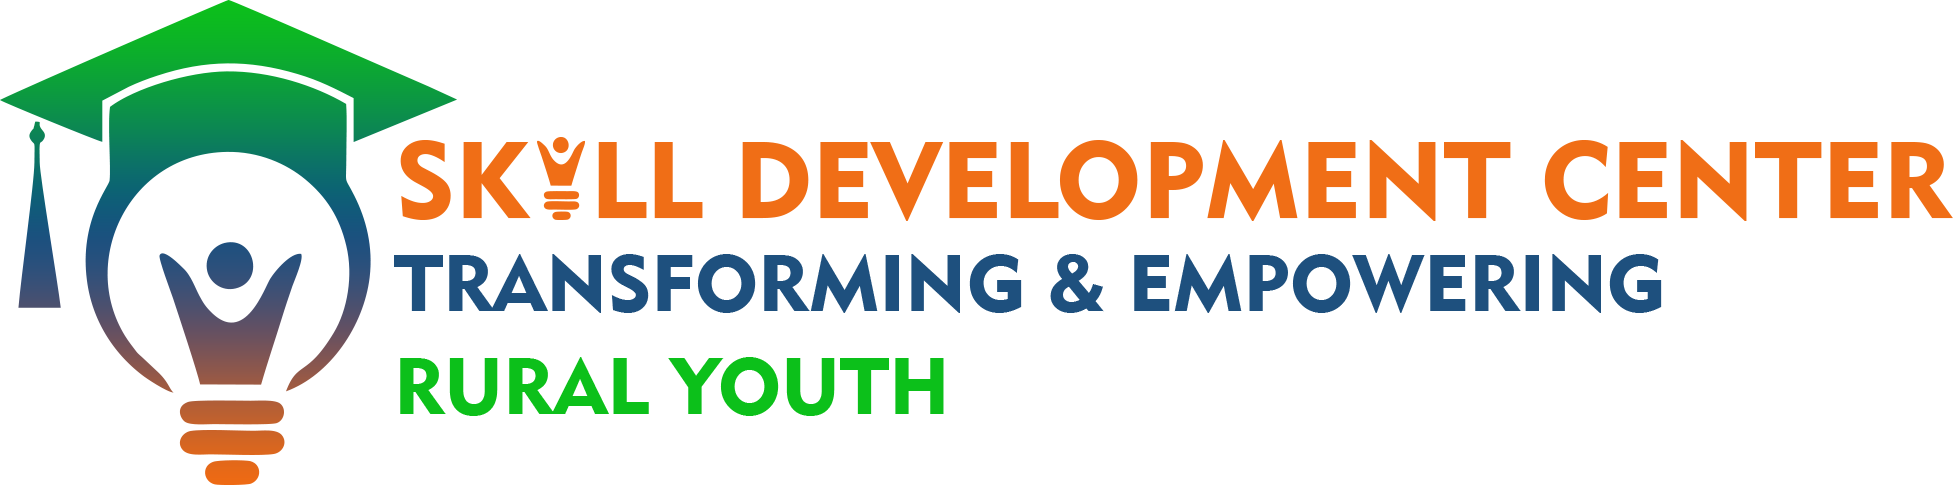 Skill Development Center Logo